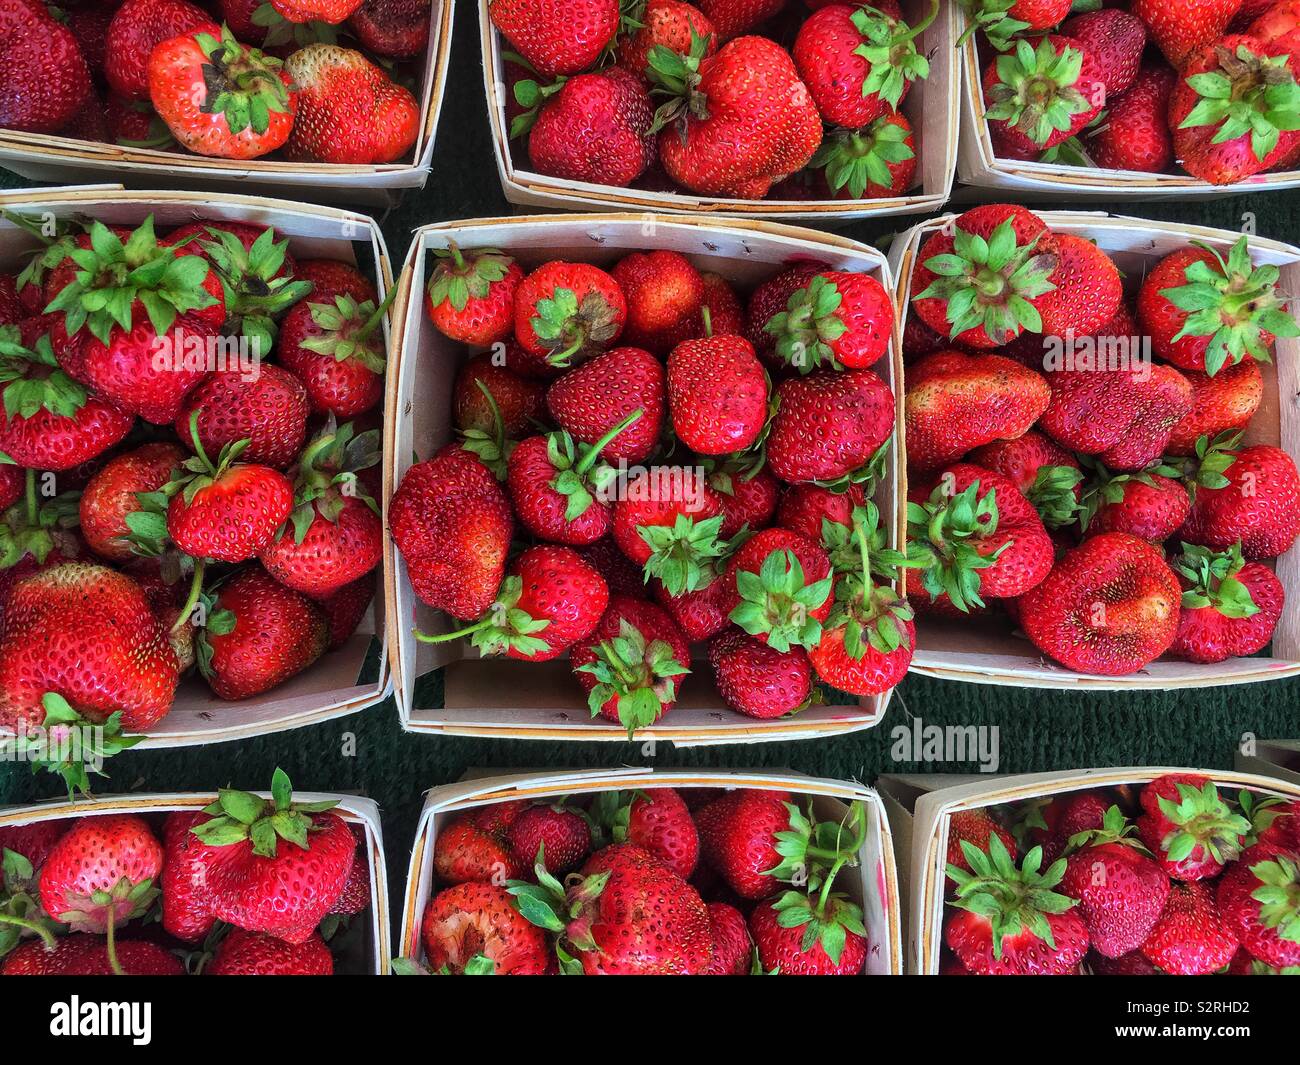 Farm fresh delicious ripe red strawberries in baskets. Stock Photo